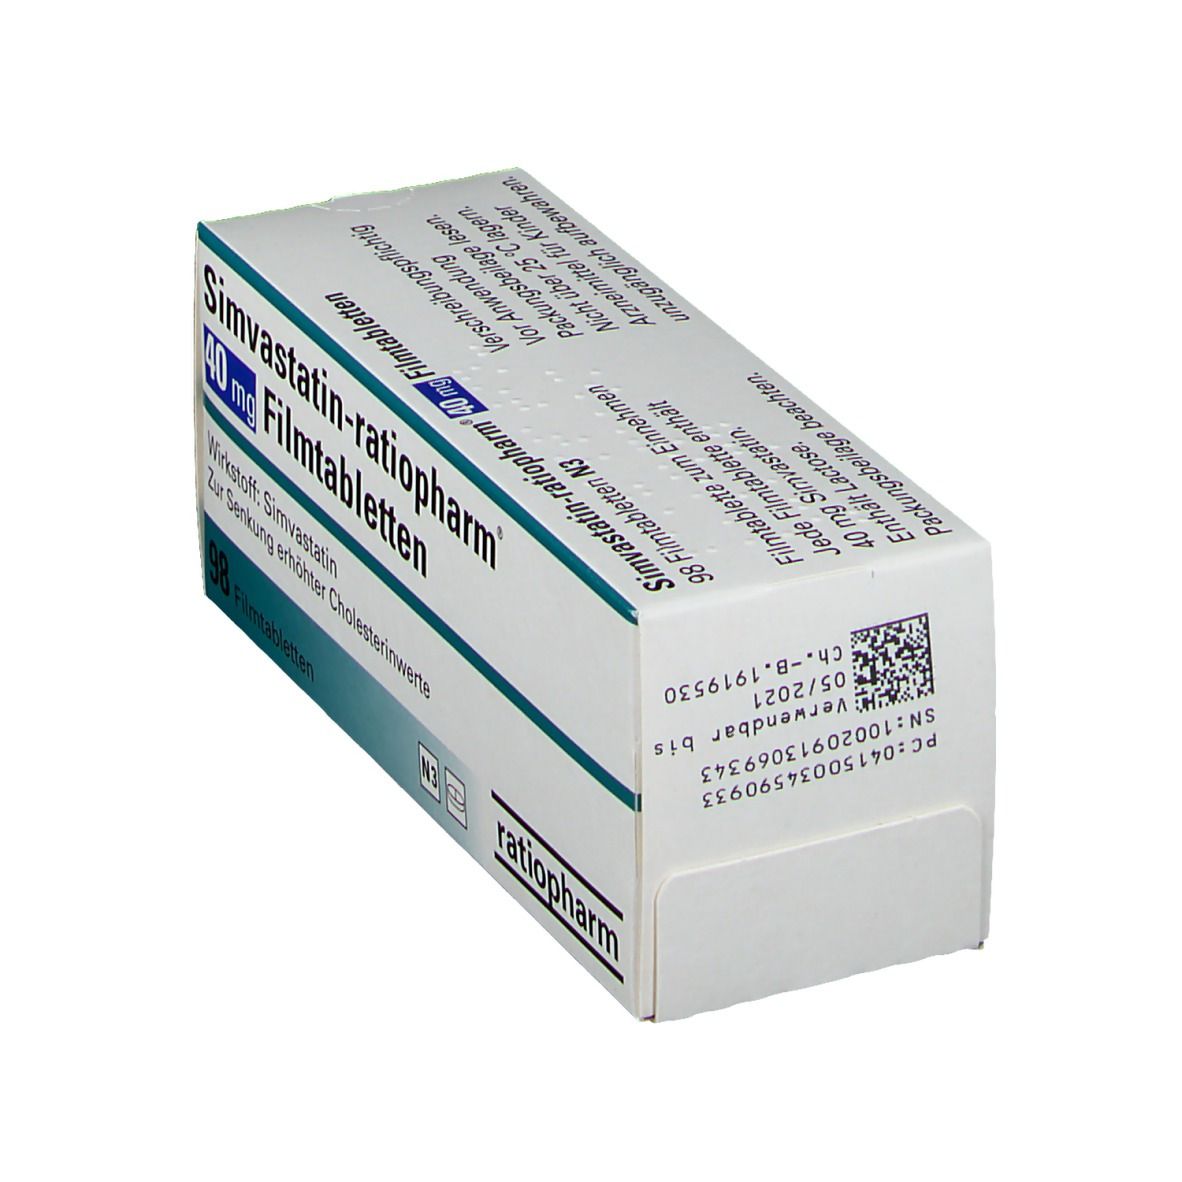 Simvastatin-ratiopharm® 40 mg